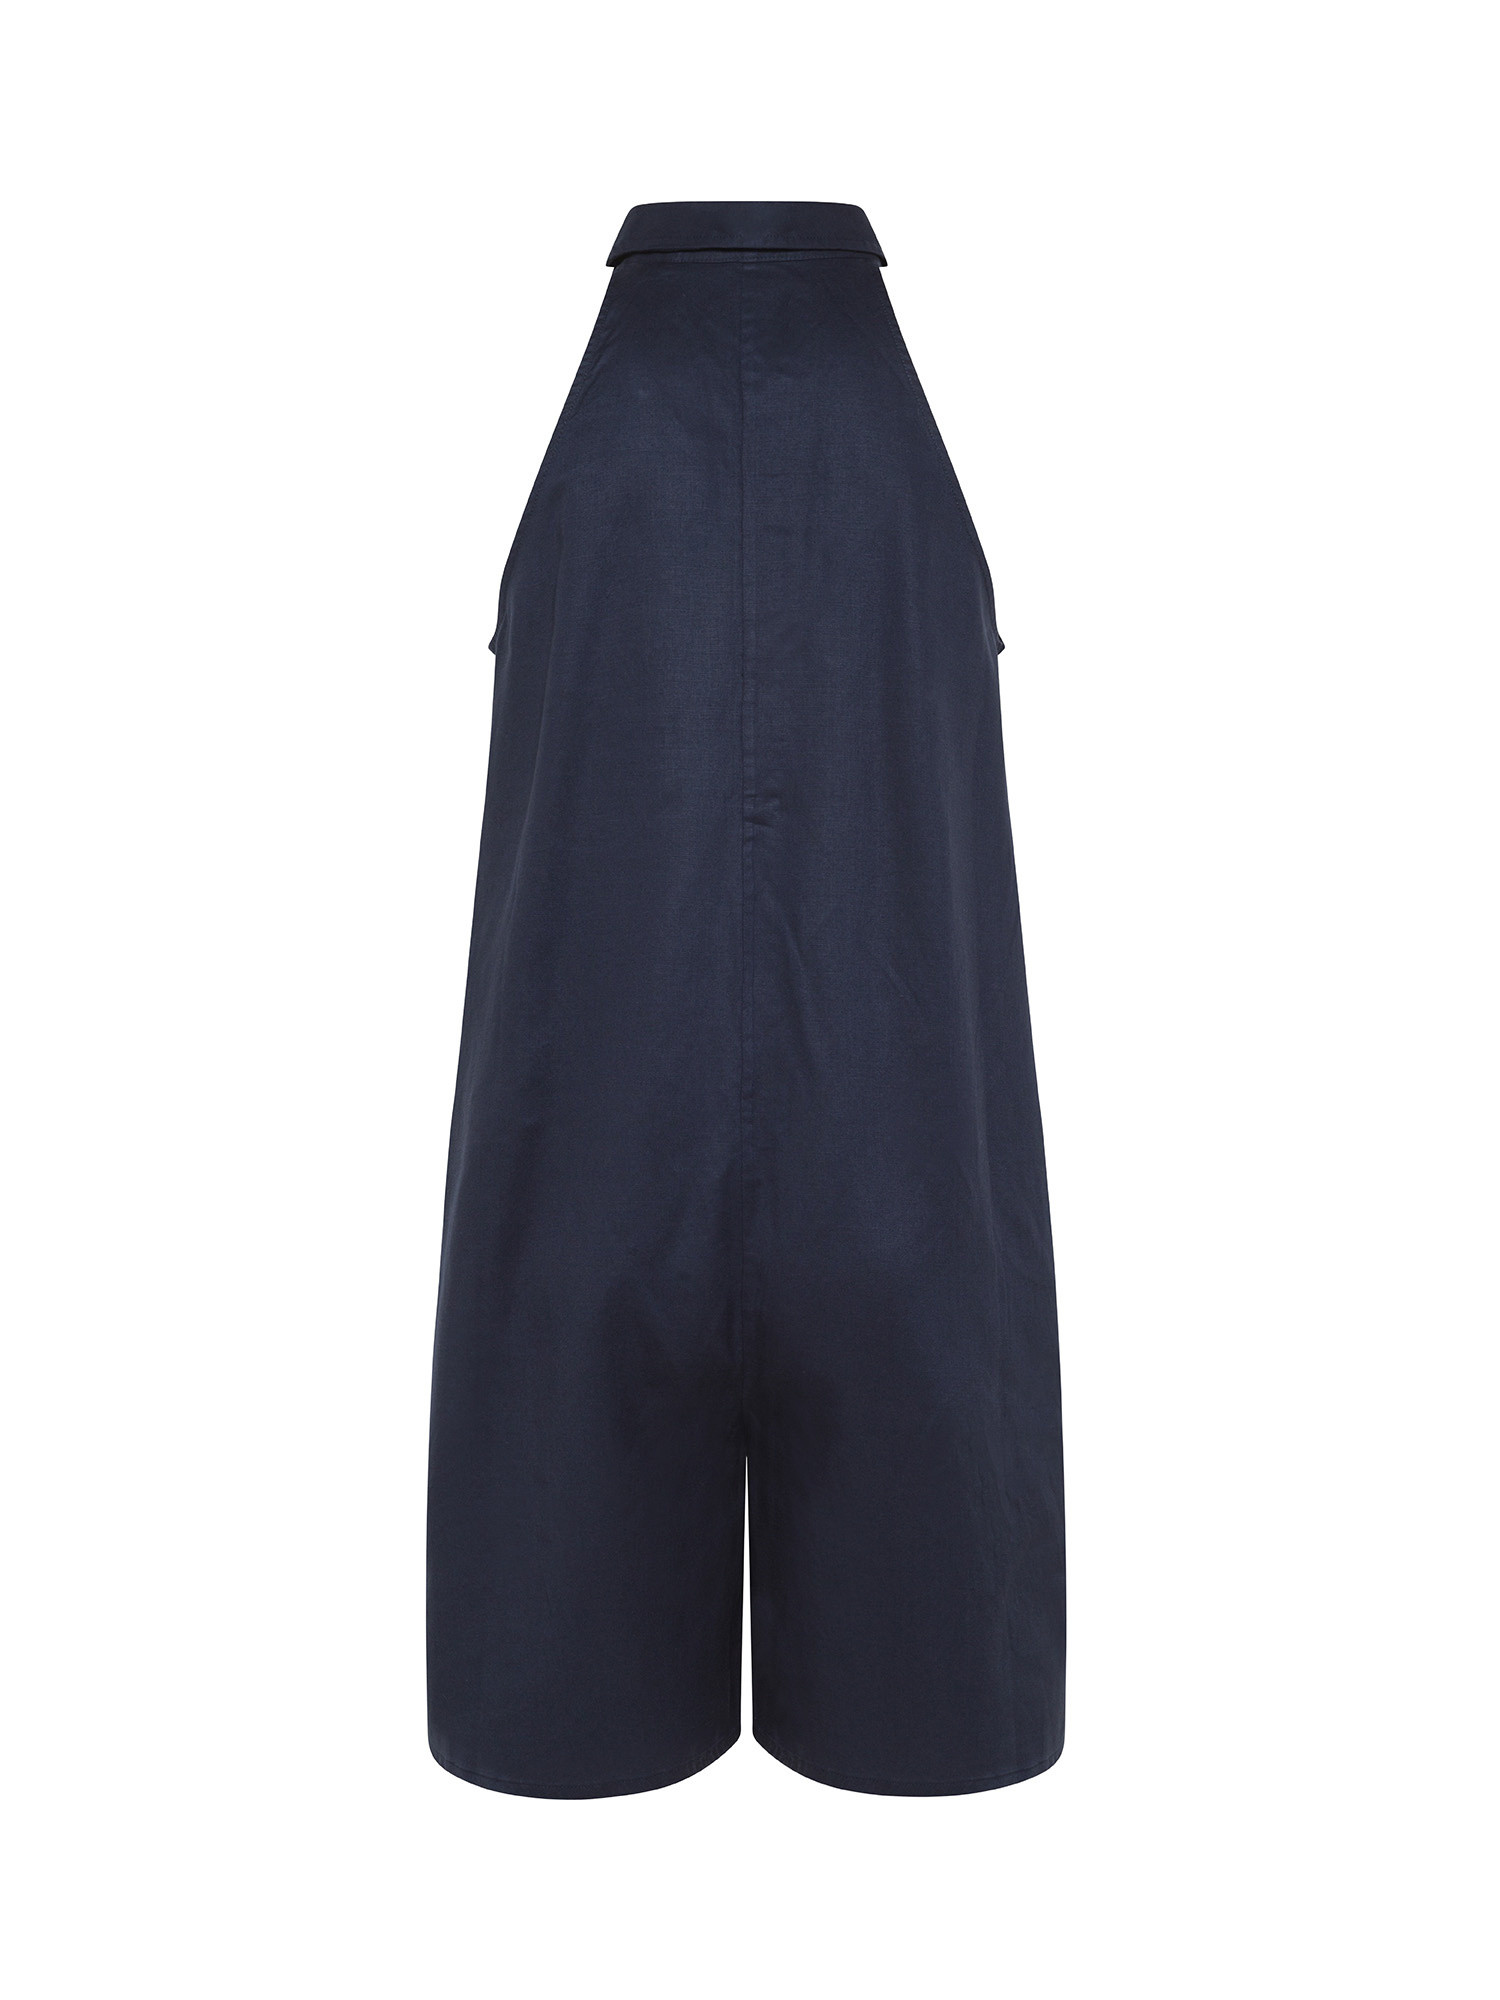 Ecoalf - Jade sleeveless jumpsuit, Blue, large image number 1